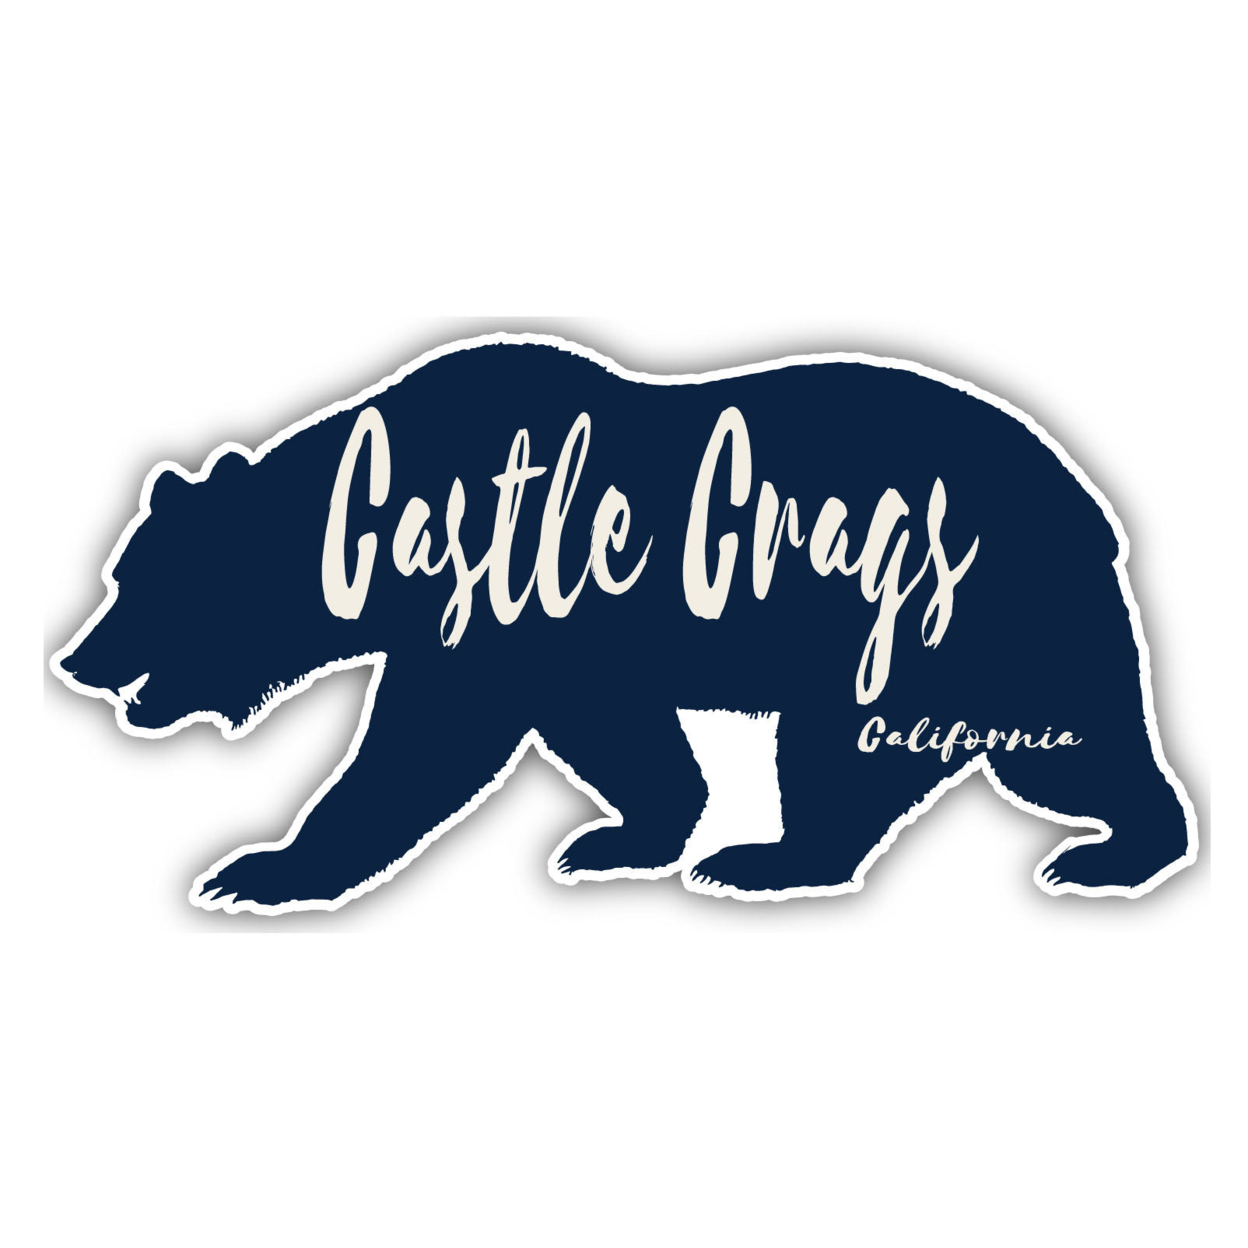 Castle Crags California Souvenir Decorative Stickers (Choose Theme And Size) - Single Unit, 6-Inch, Bear